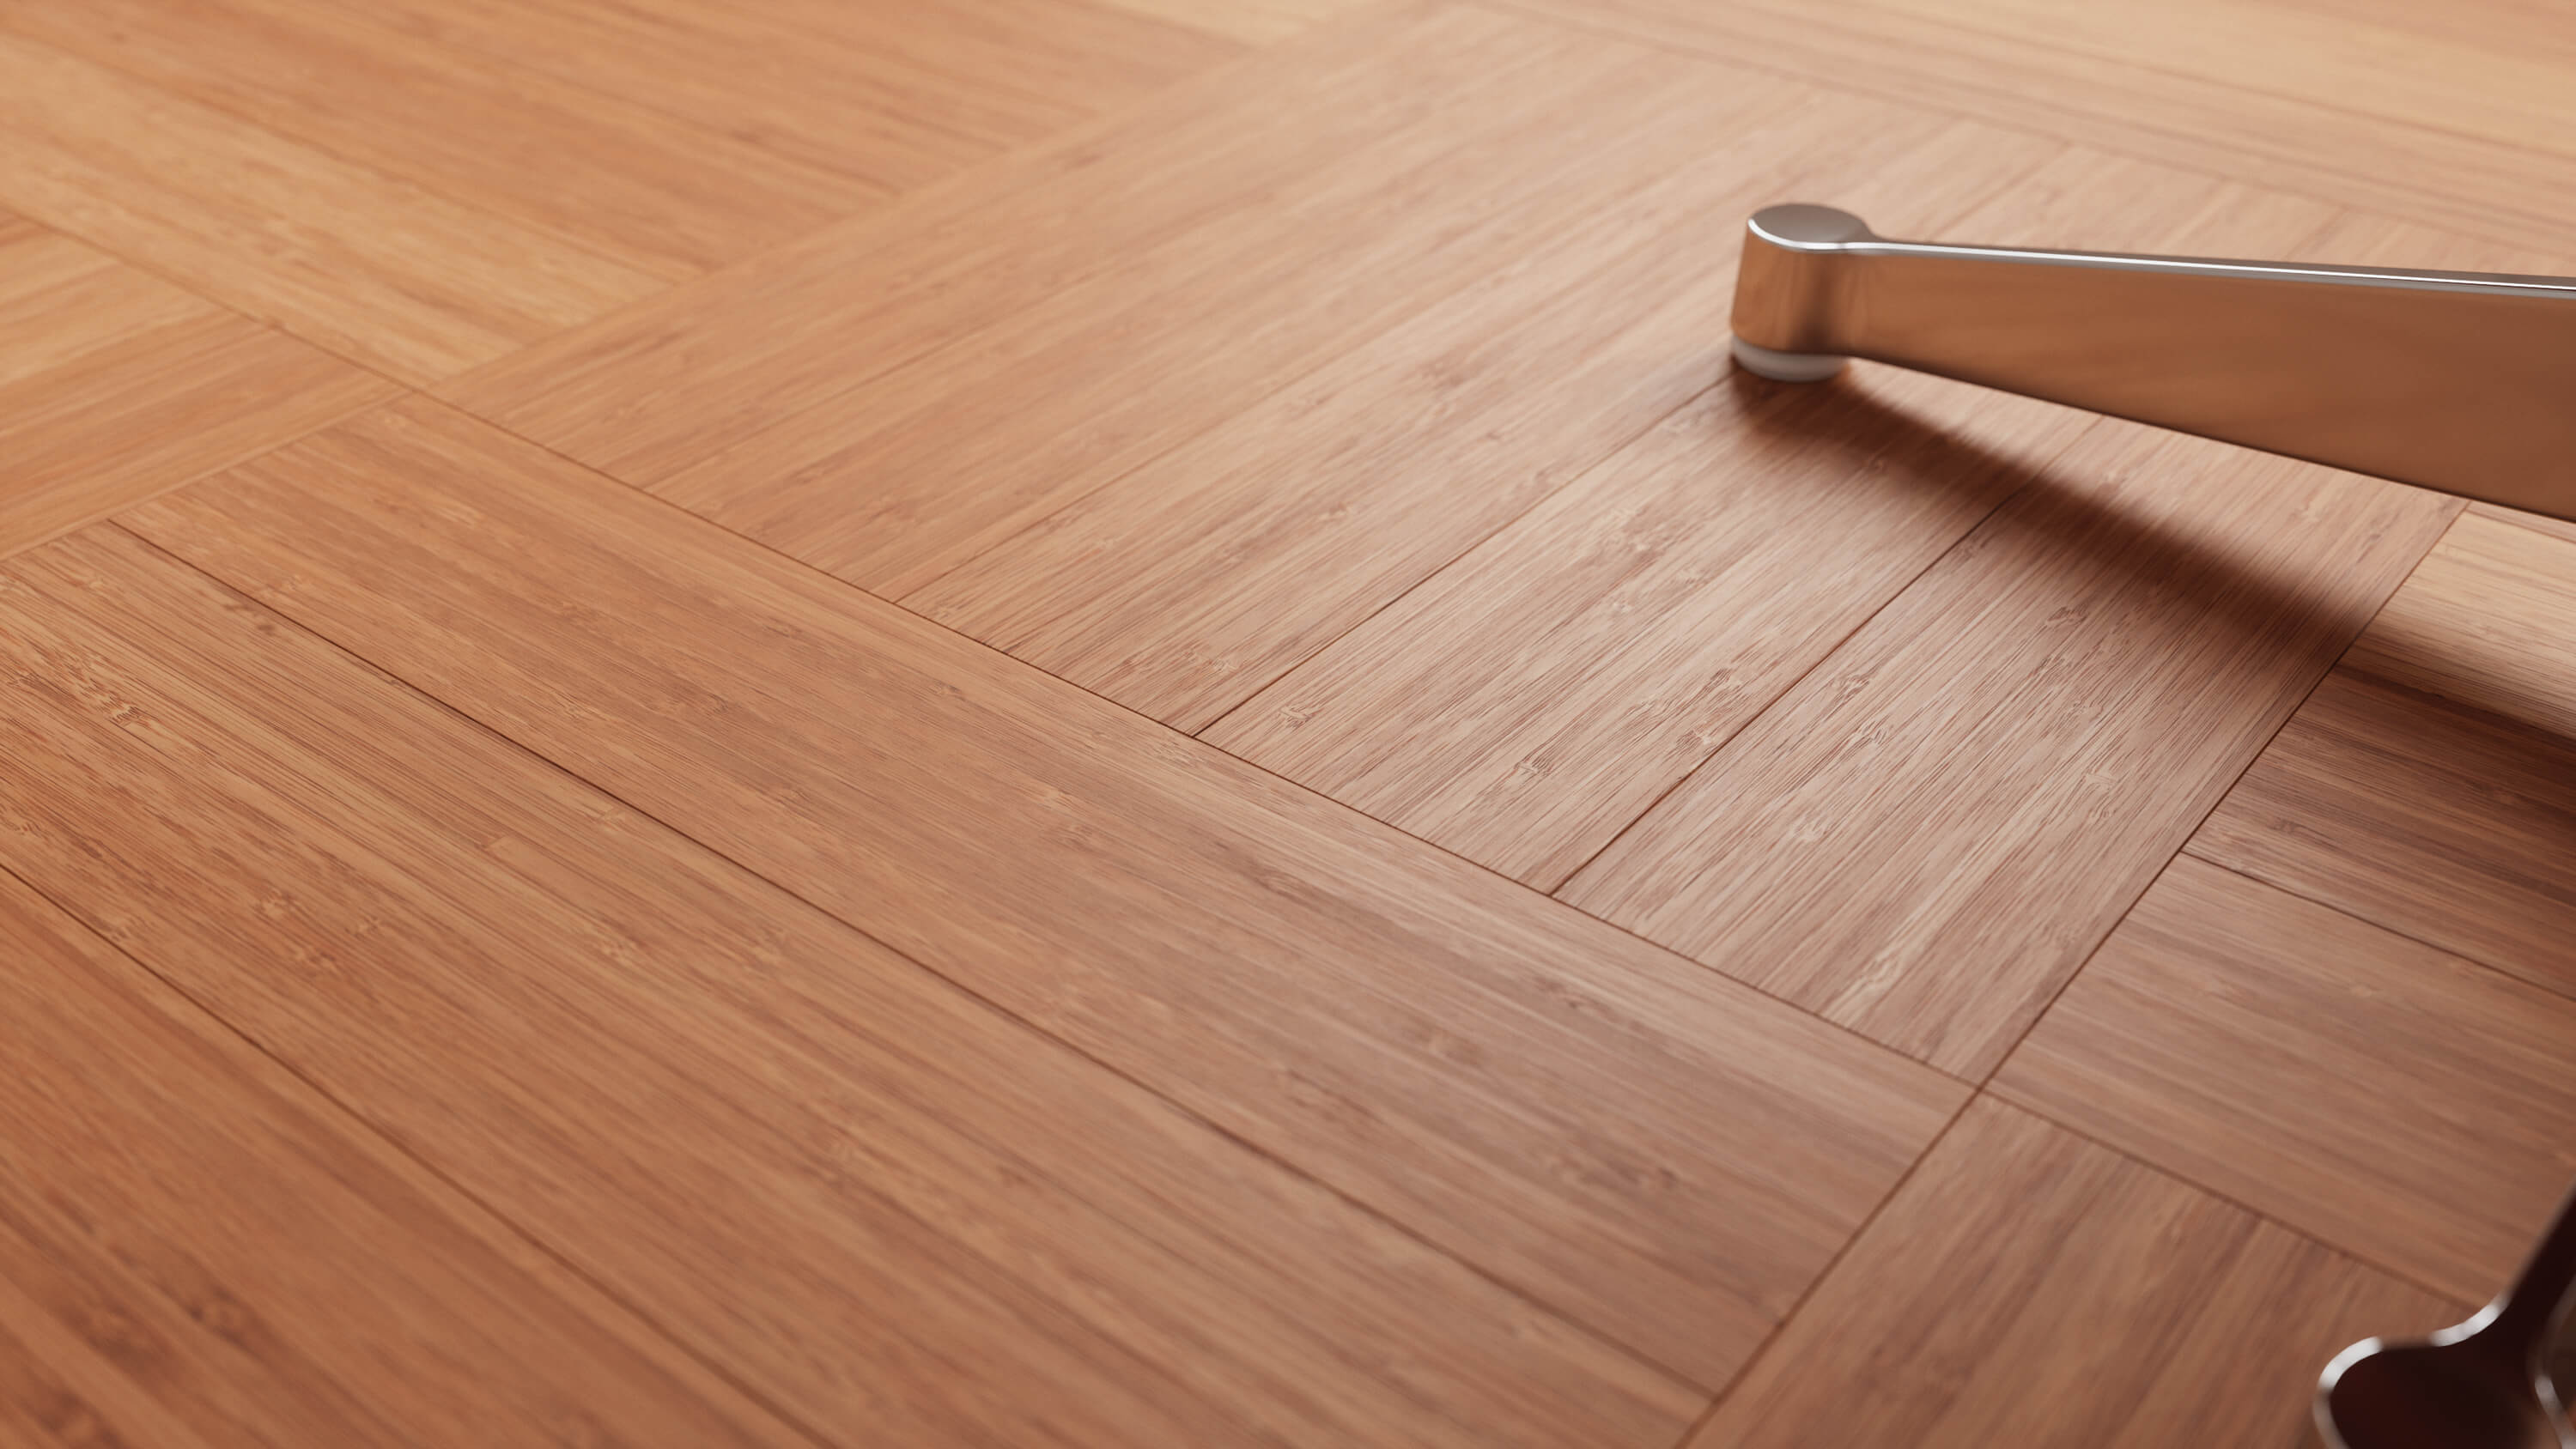 seamless bamboo floor texture